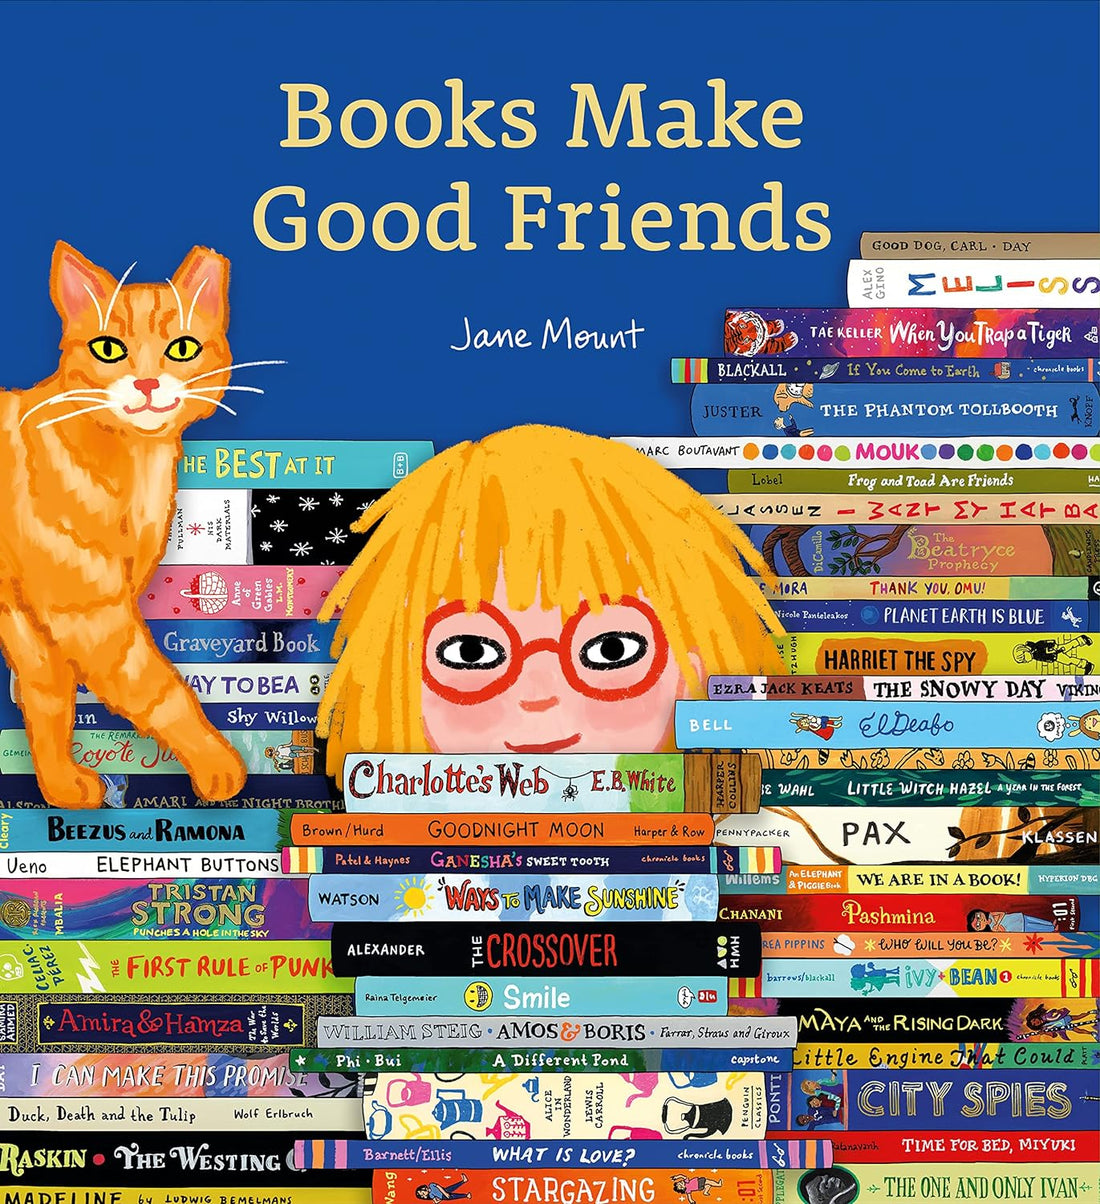 Books Make Good Friends by Jane Mount